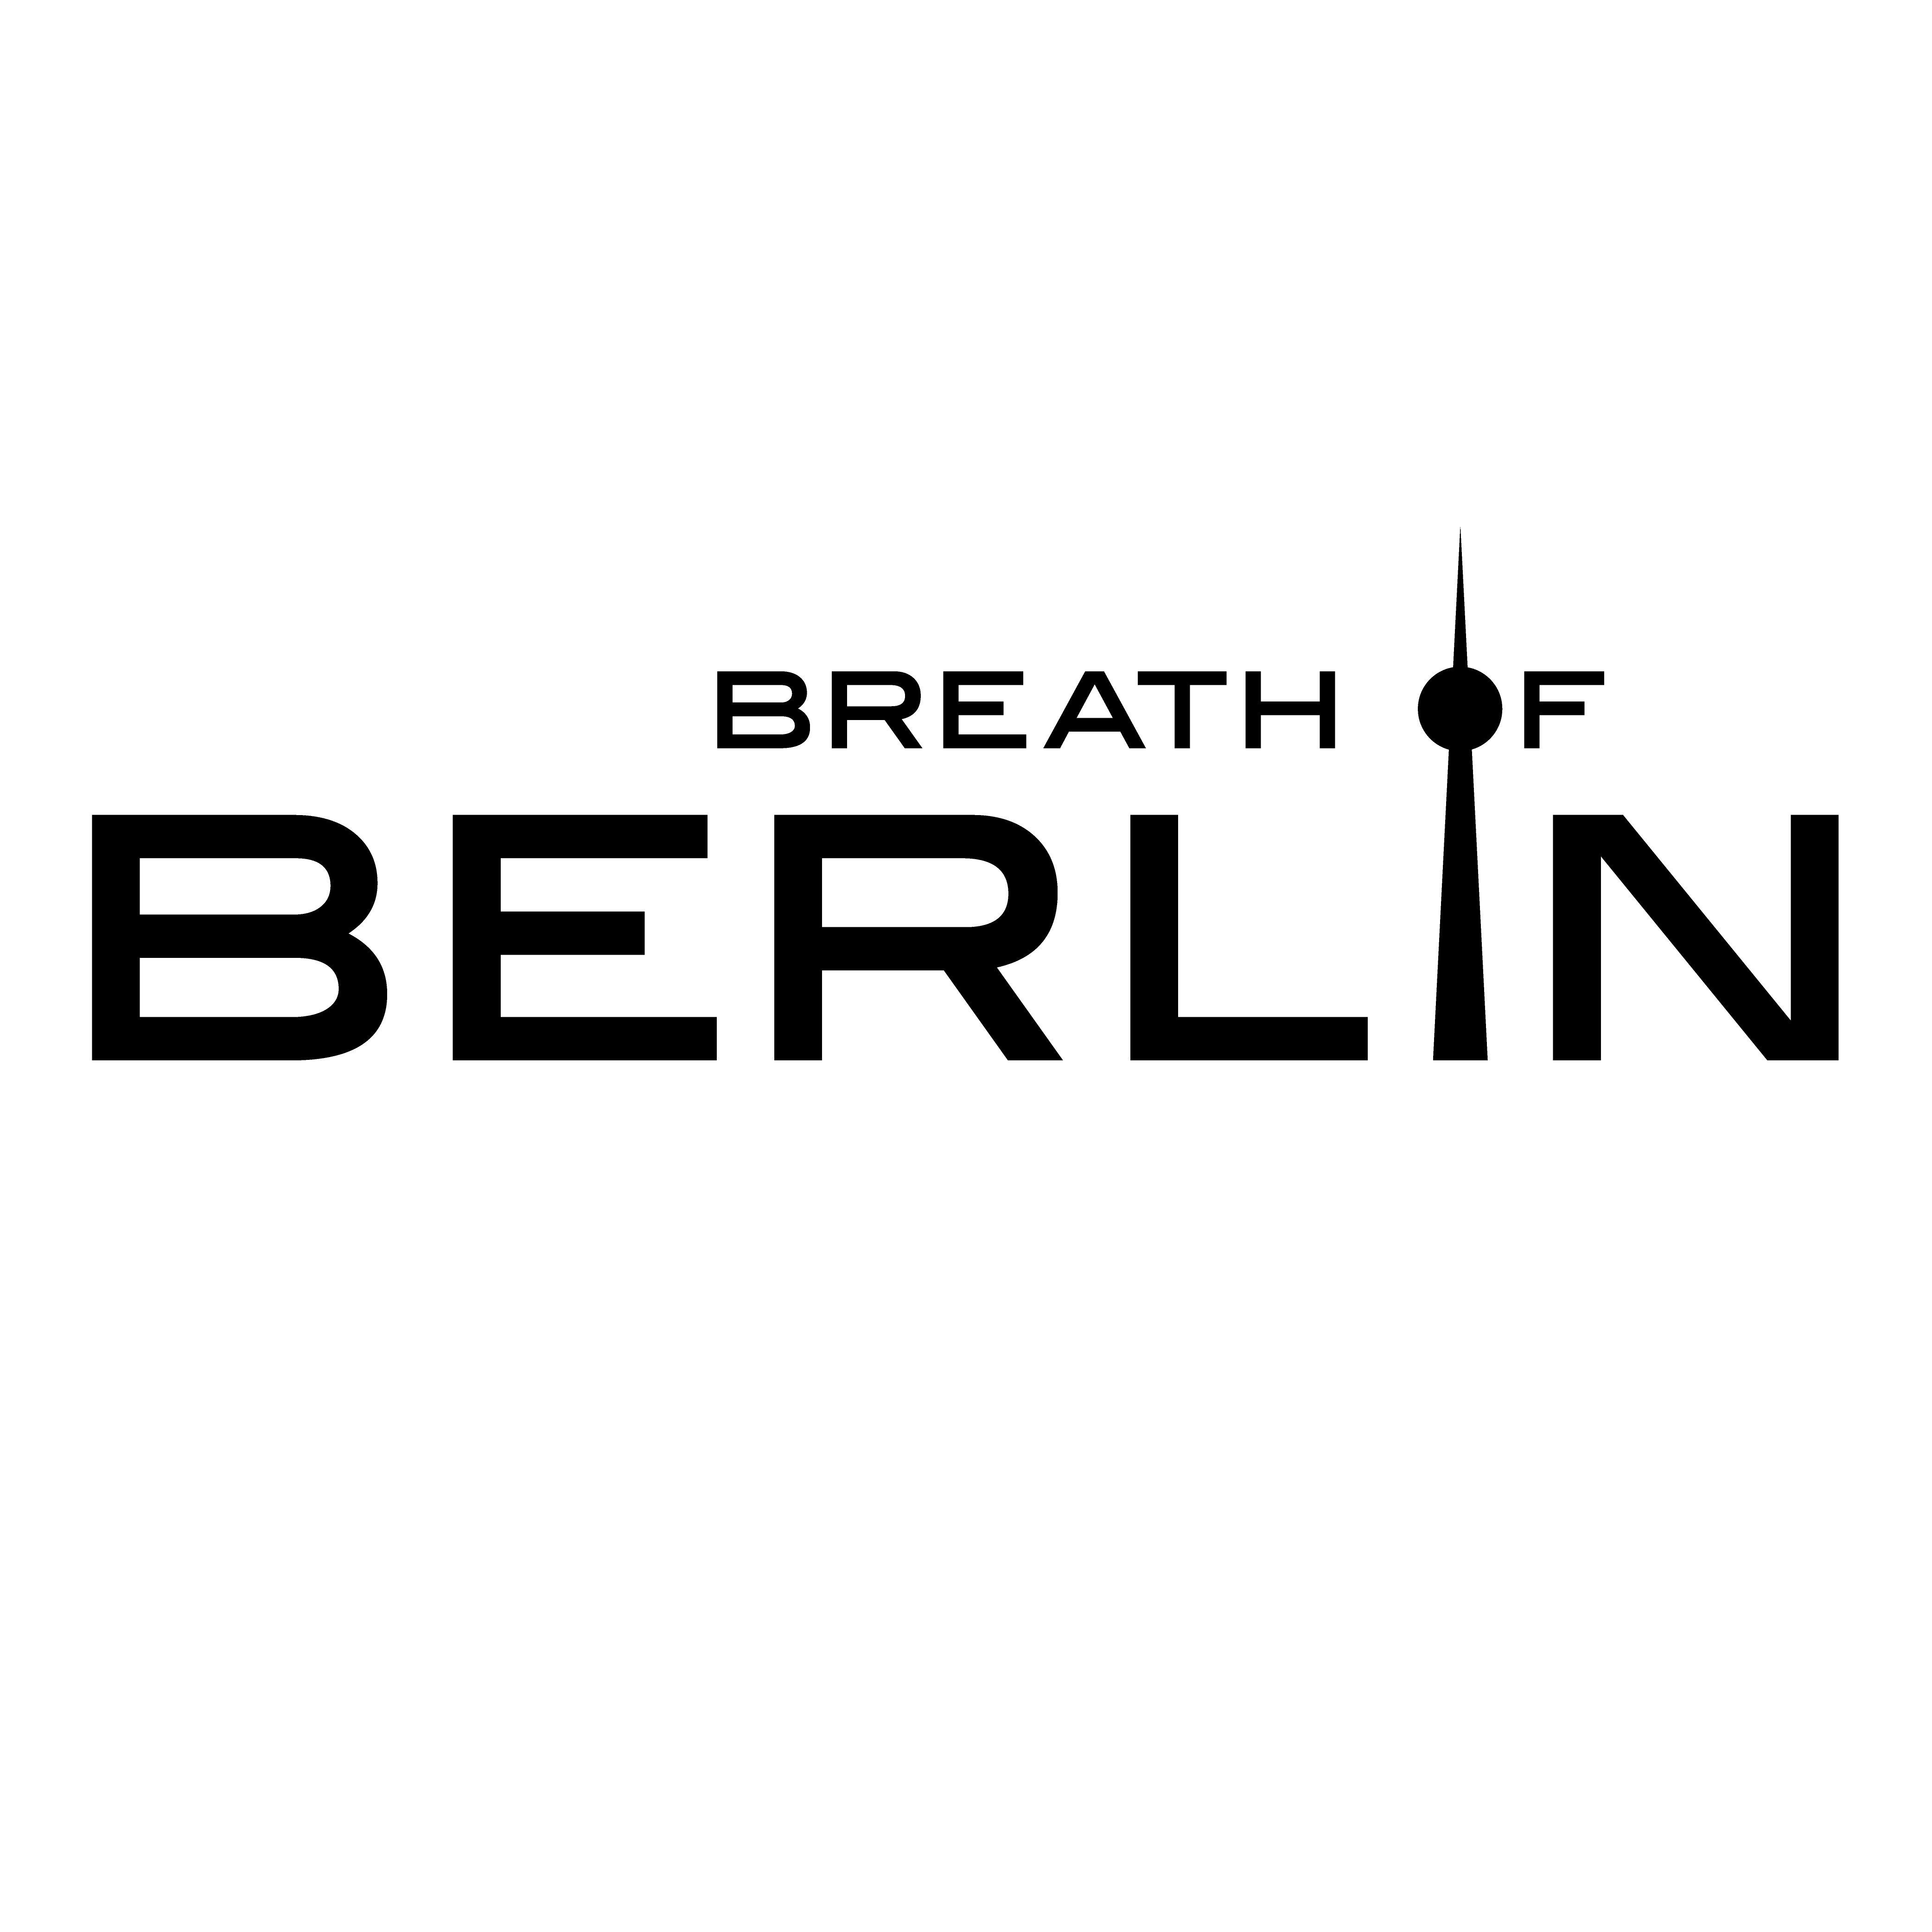 BREATH OF BERLIN